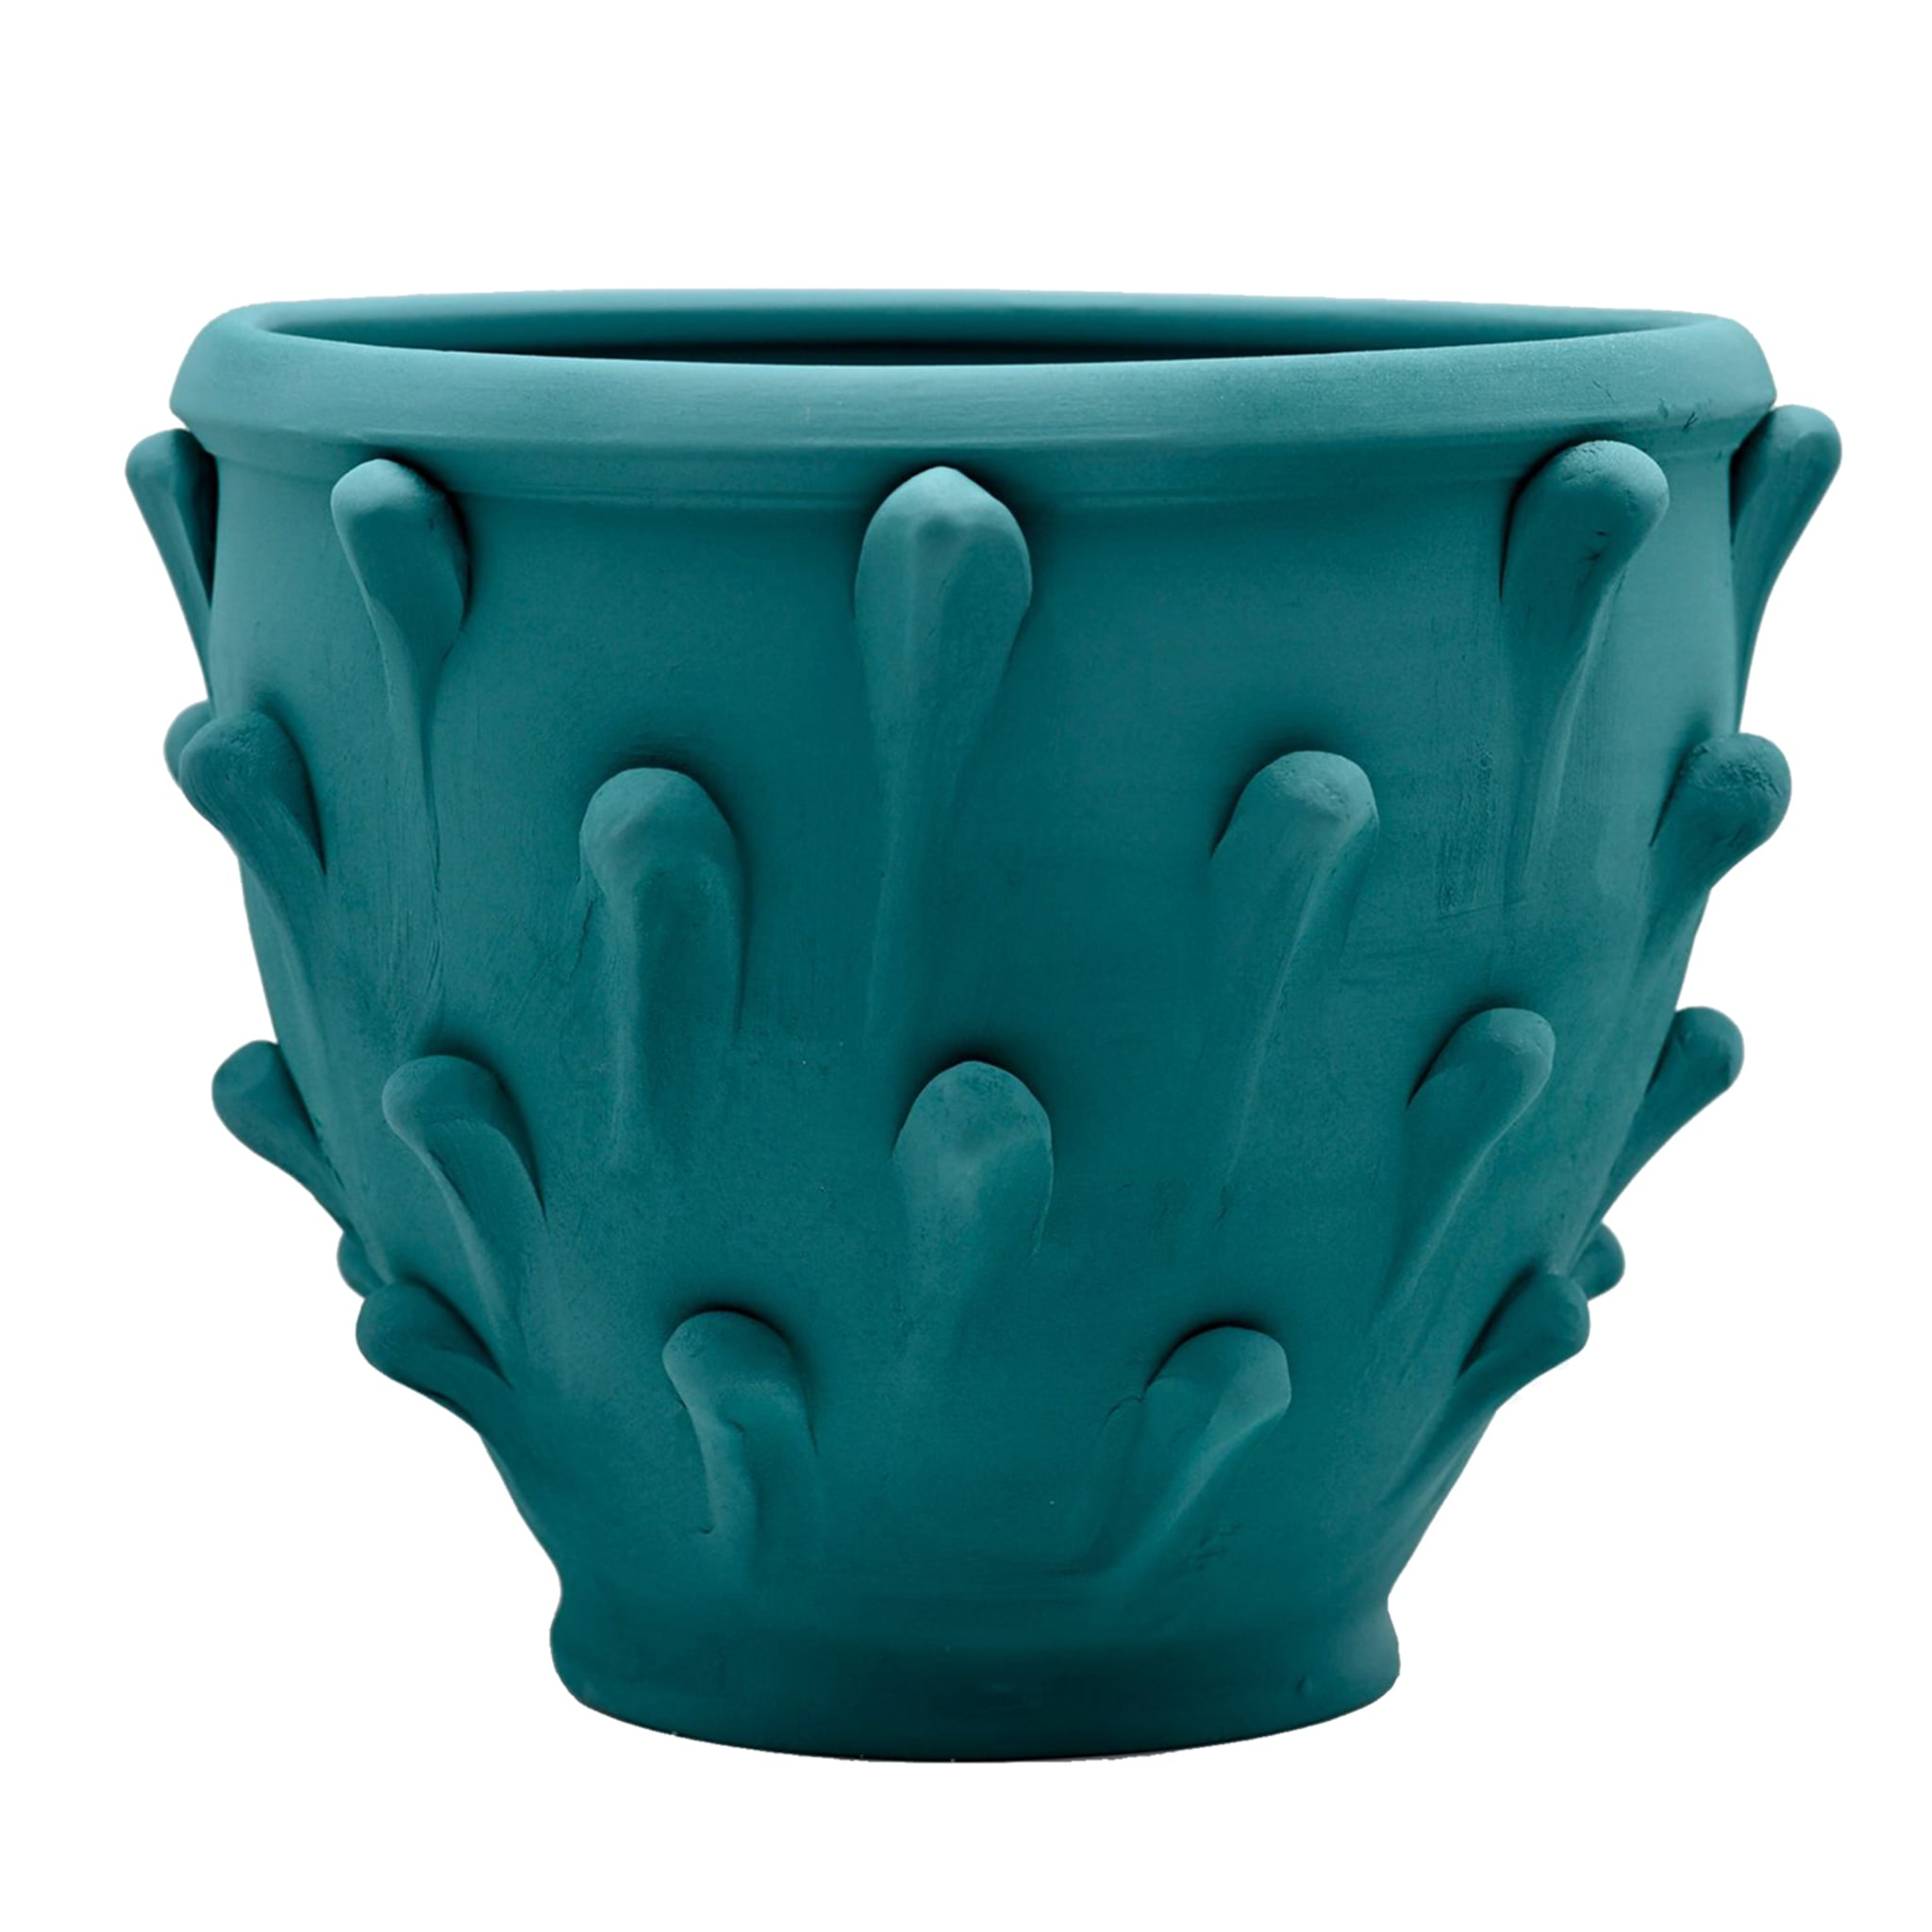 Italian Teal Vase Handmade with Care